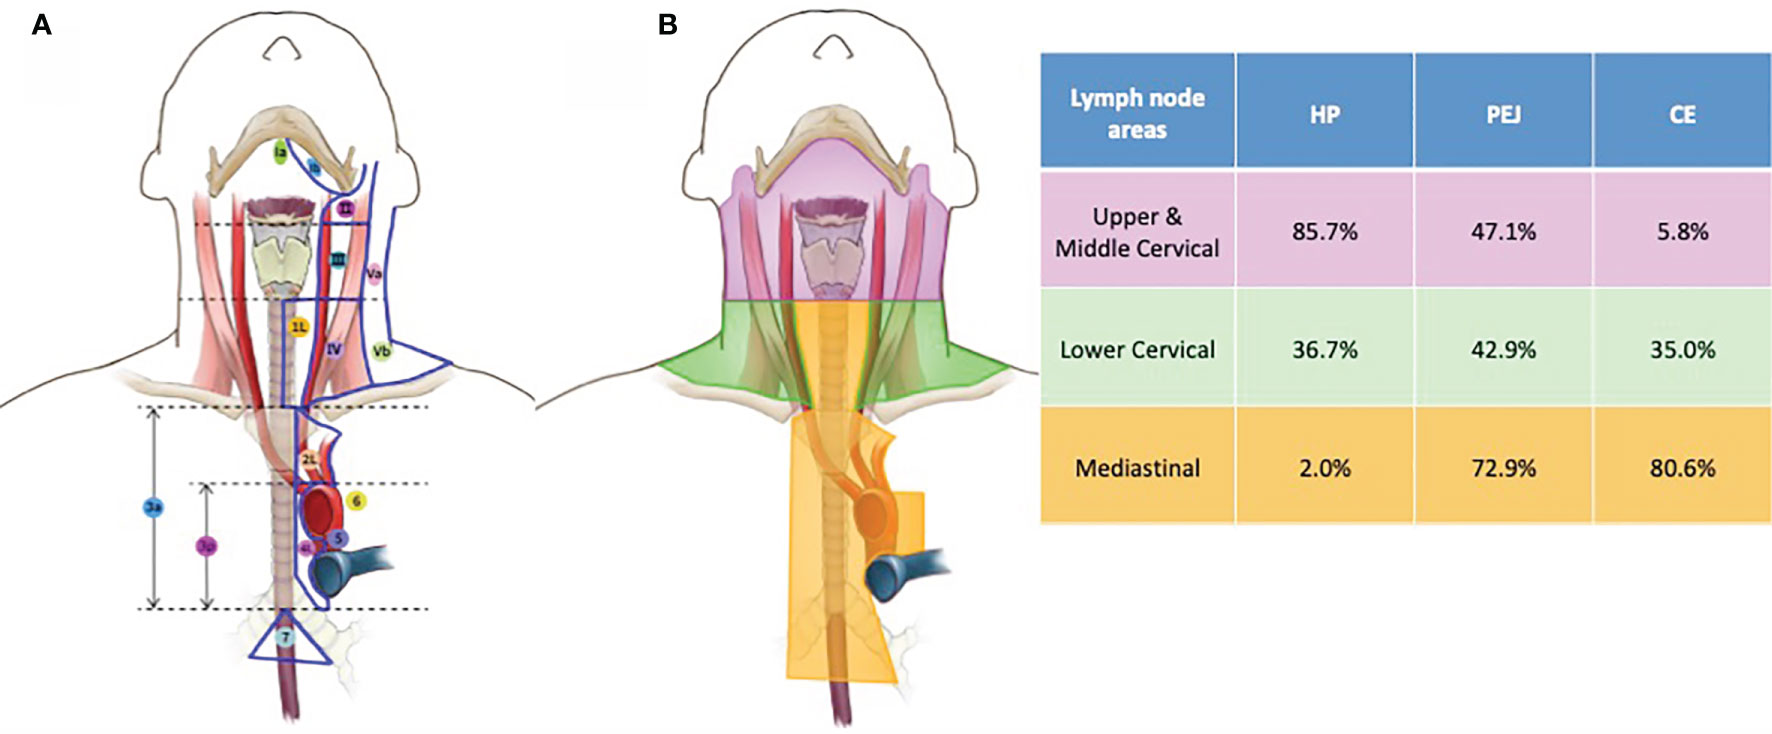 Periesophageal Lymph Nodes